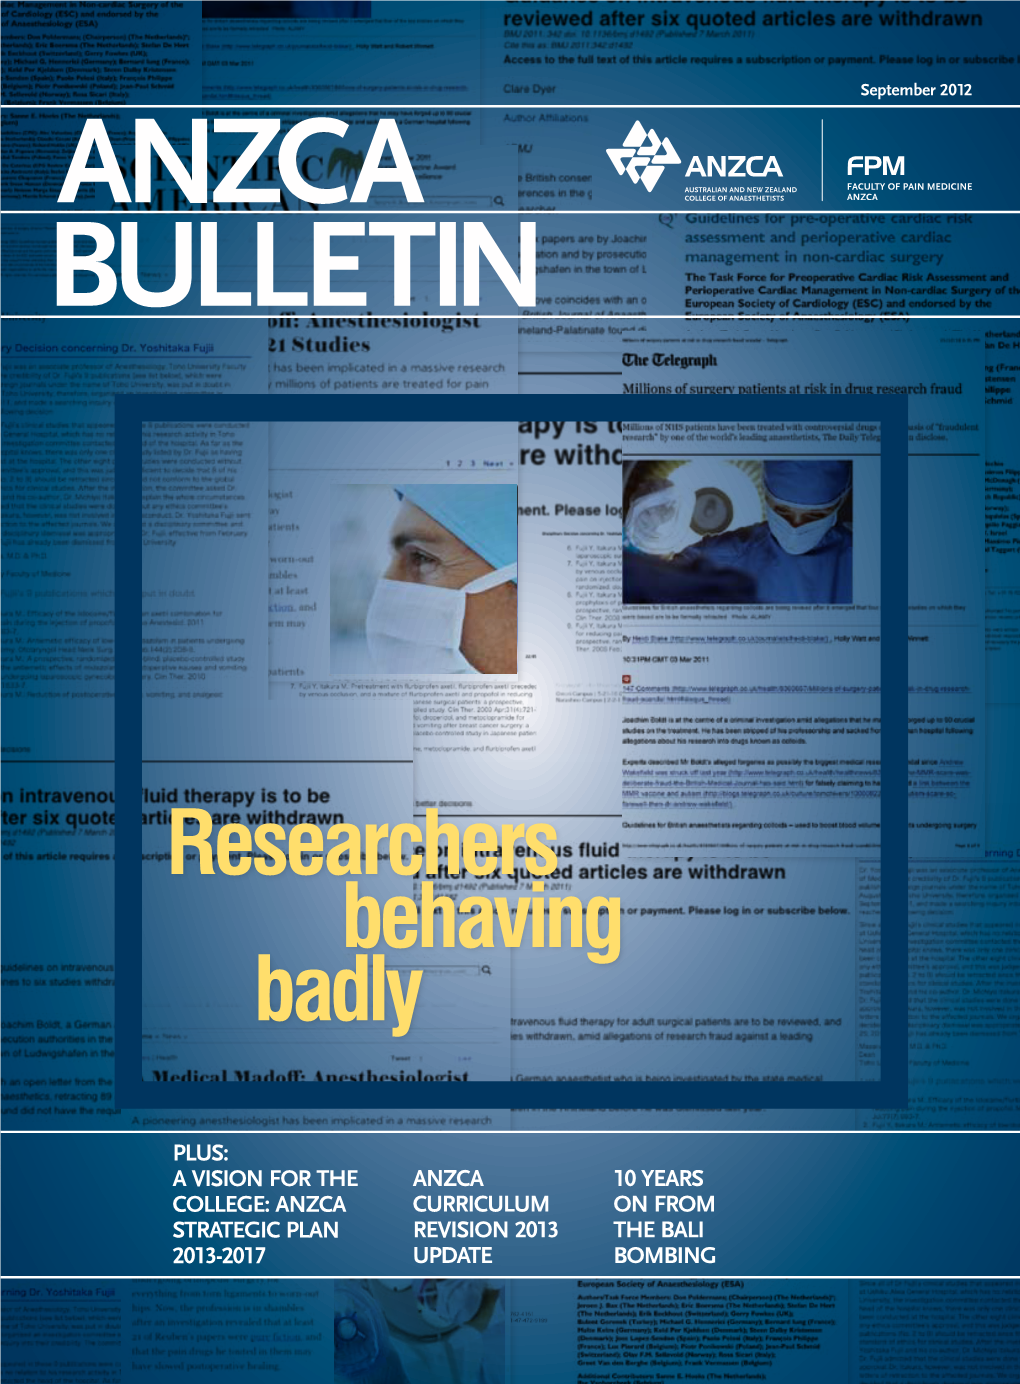 Researchers Behaving Badly ANZCA BULLETIN